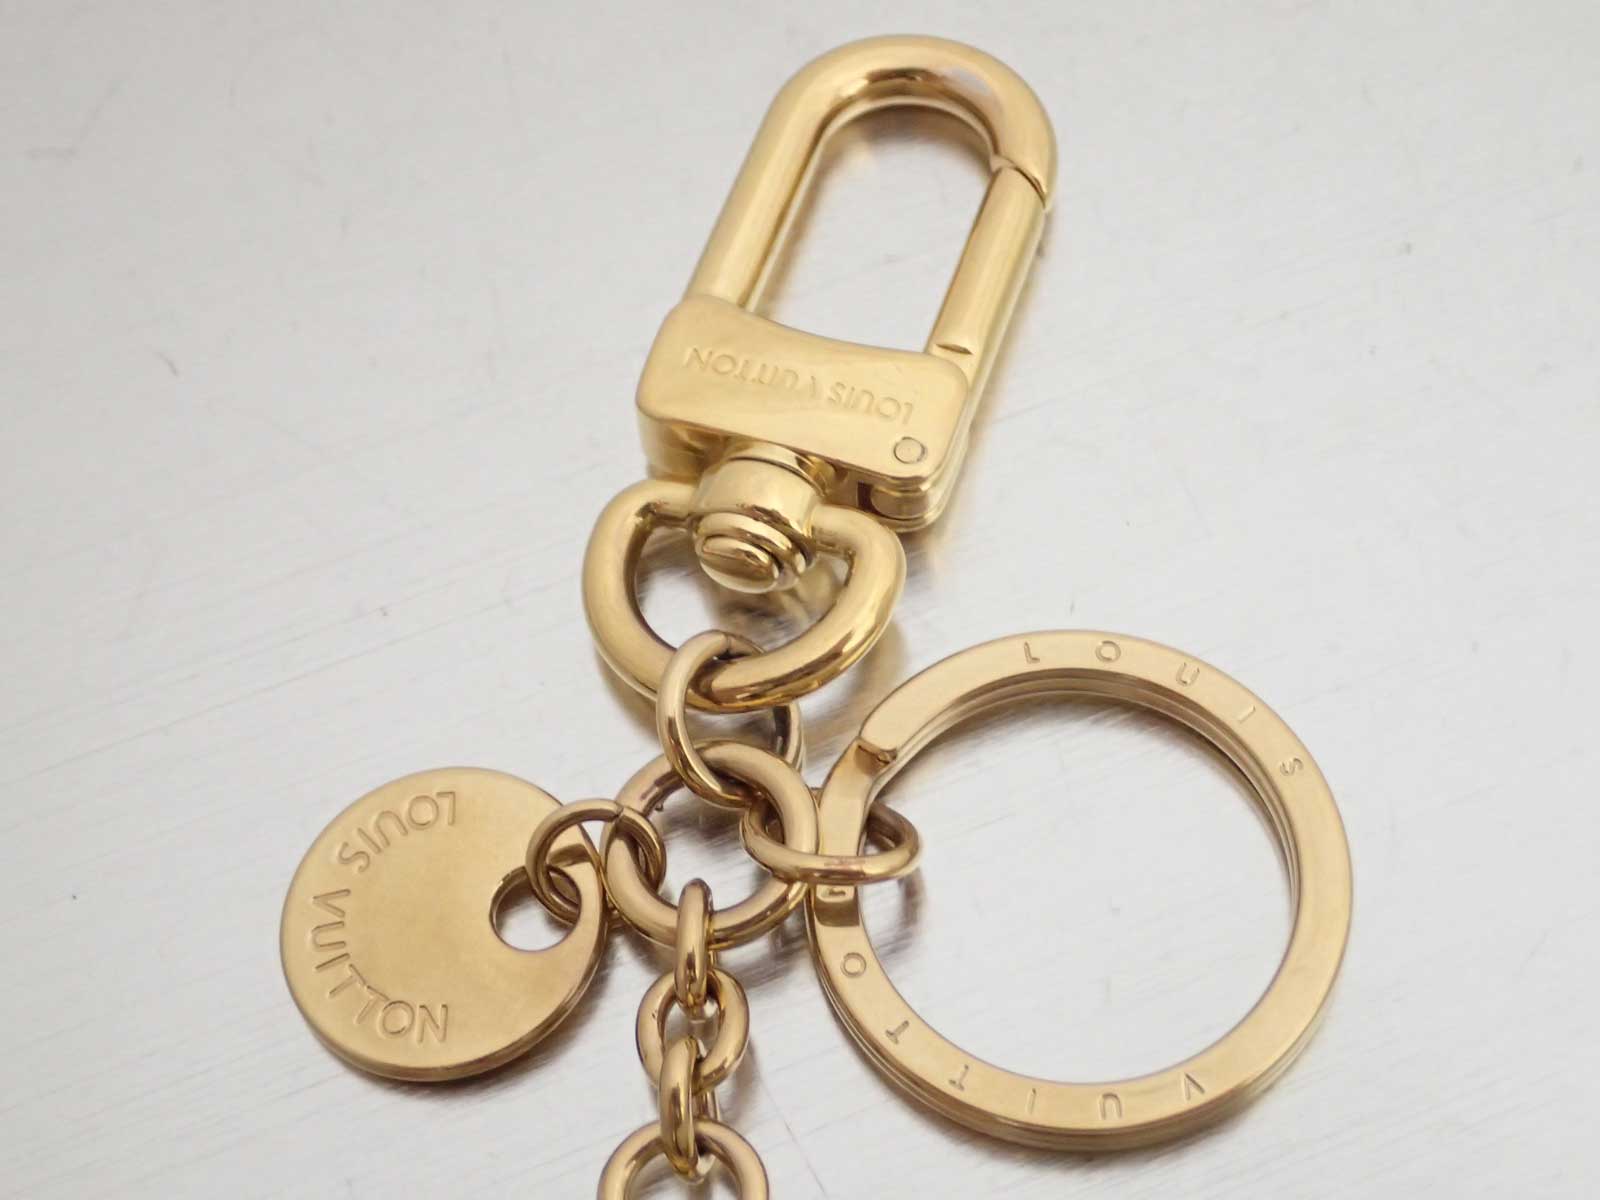 Auth Louis Vuitton Bag Charm LV Circle Key Holder Goldtone Metal - e44631c | eBay